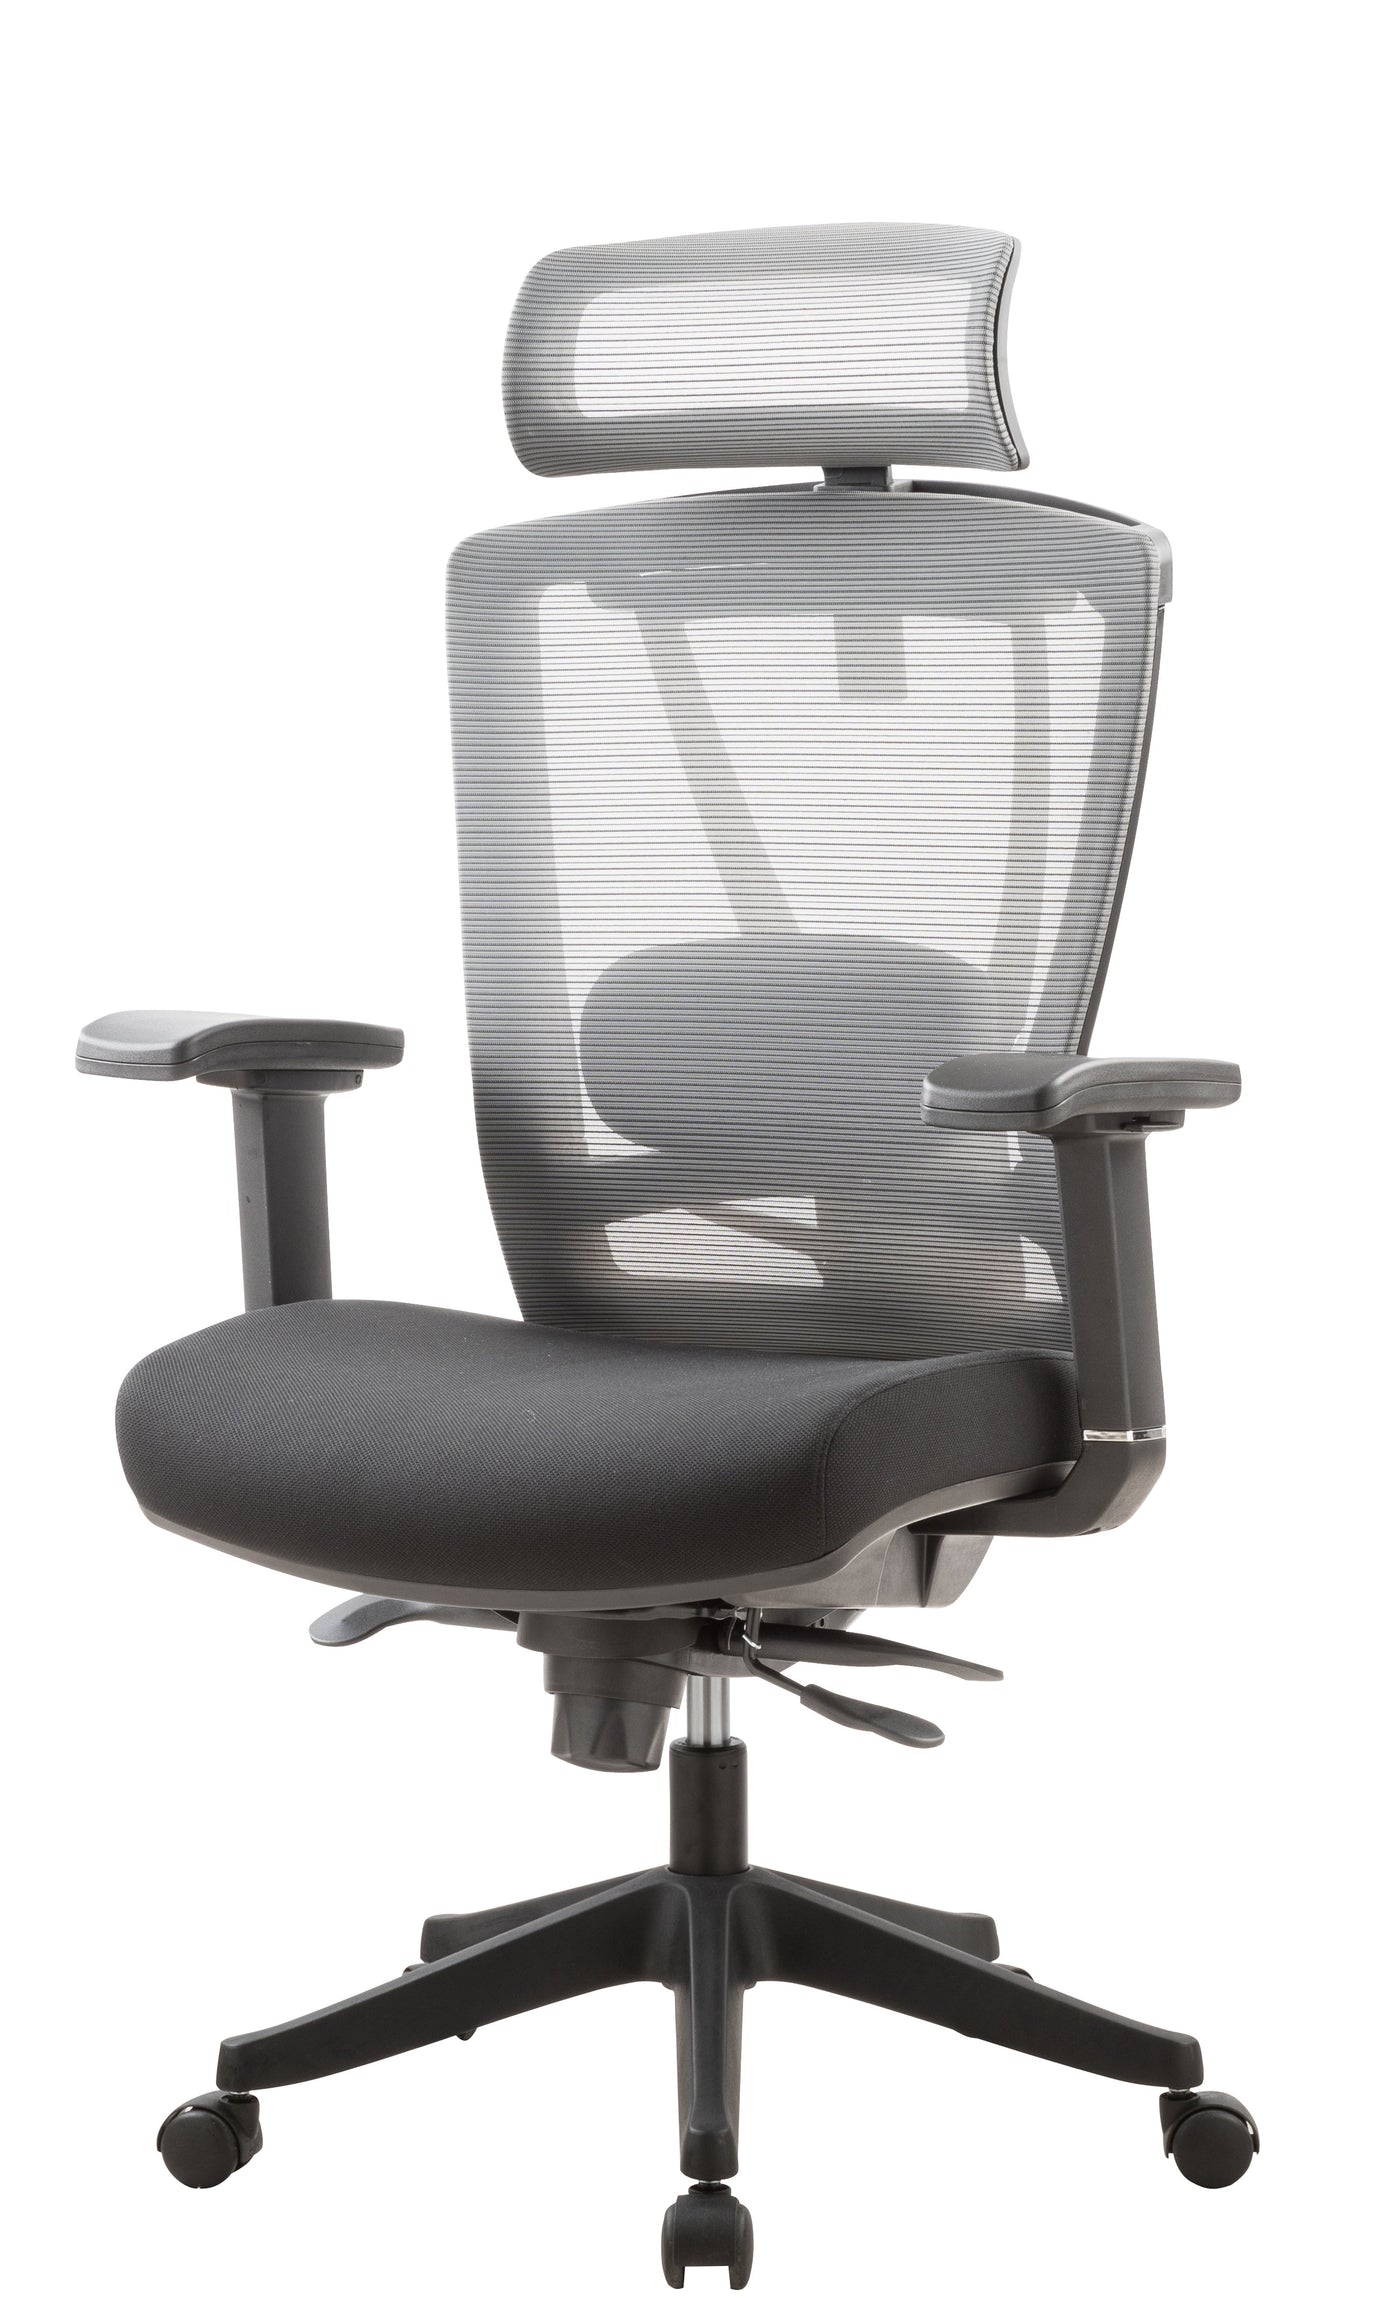 AeryChair - Office Chair by EFFYDESK